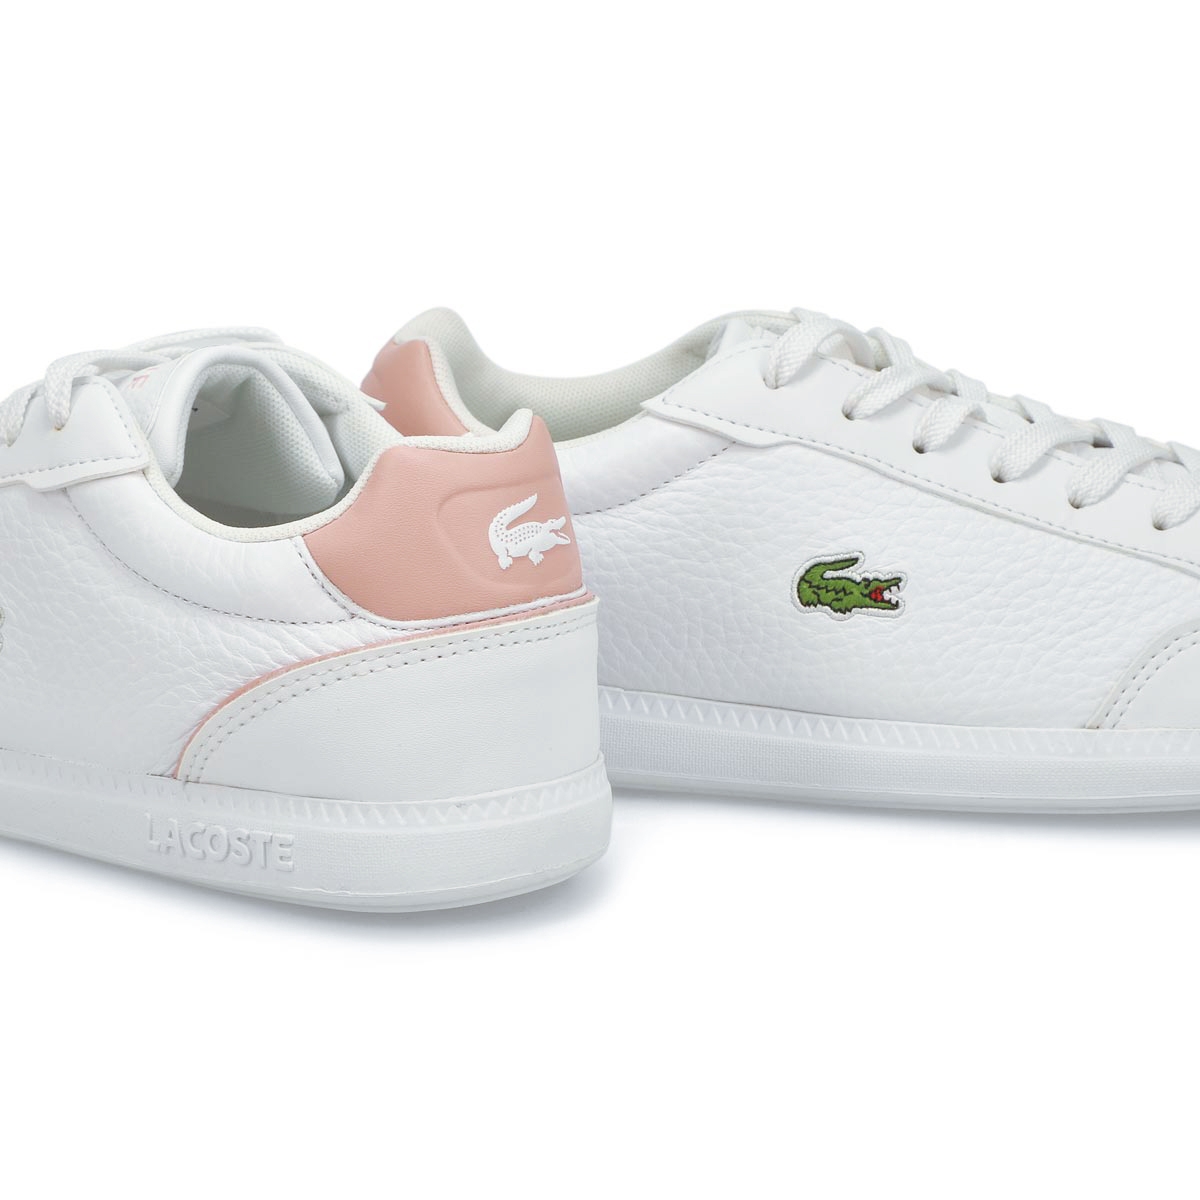 Women's Graduate Cap 0120 Sneaker - White/Pink